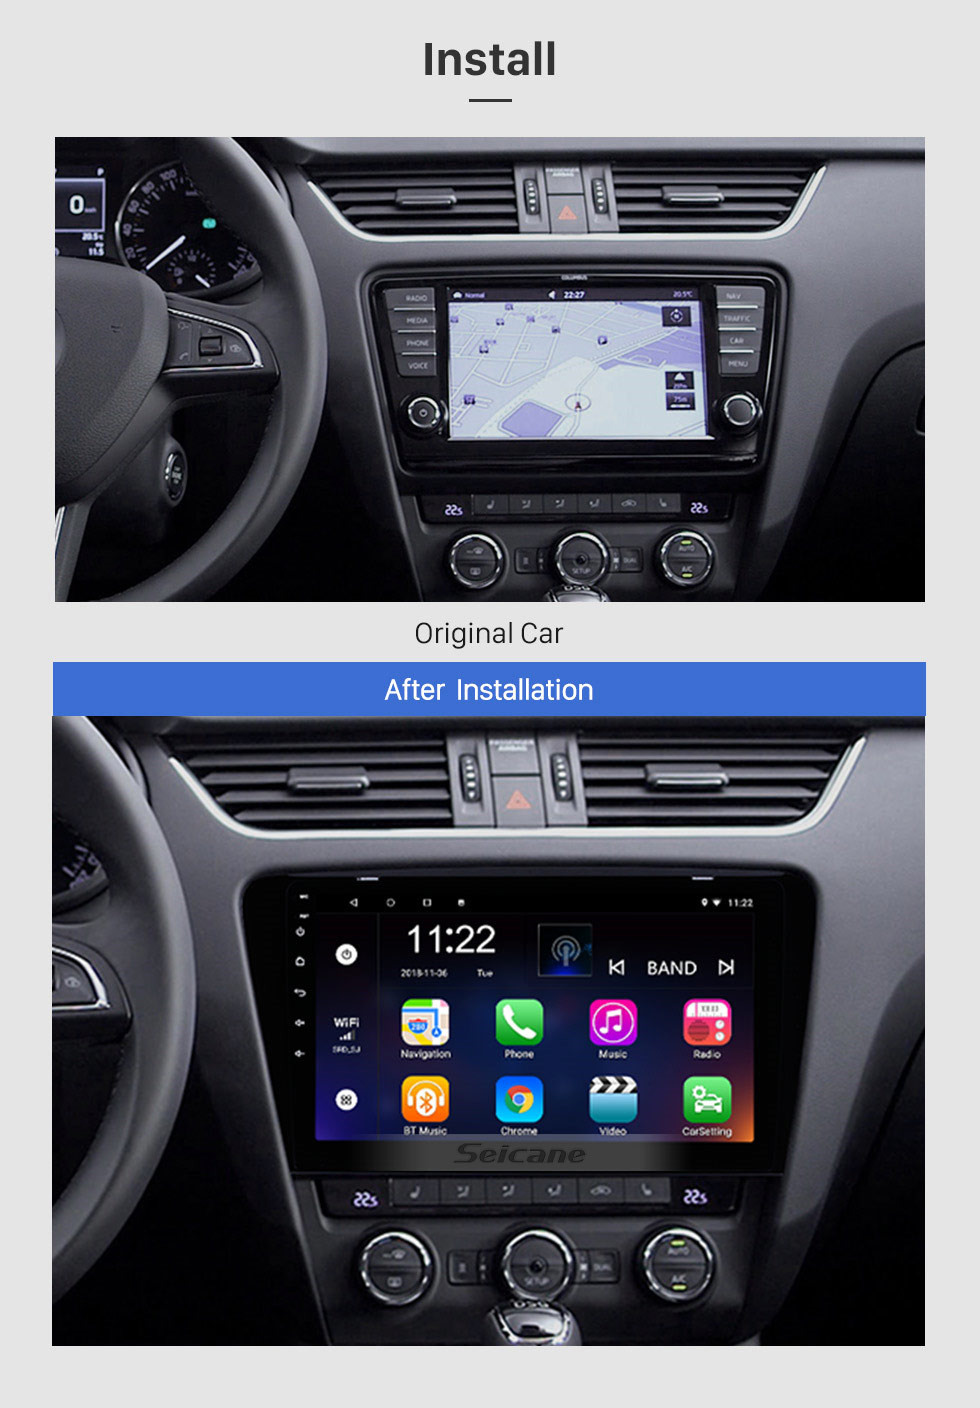 Seicane Android 10.0 10.1 inch HD 1024*600 Touch Screen Car Radio For 2015 2016 2017 SKODA Octavia (UV) GPS Navigation Bluetooth WIFI USB Mirror Link Support DVR OBD2 Steering Wheel Control Backup Camera